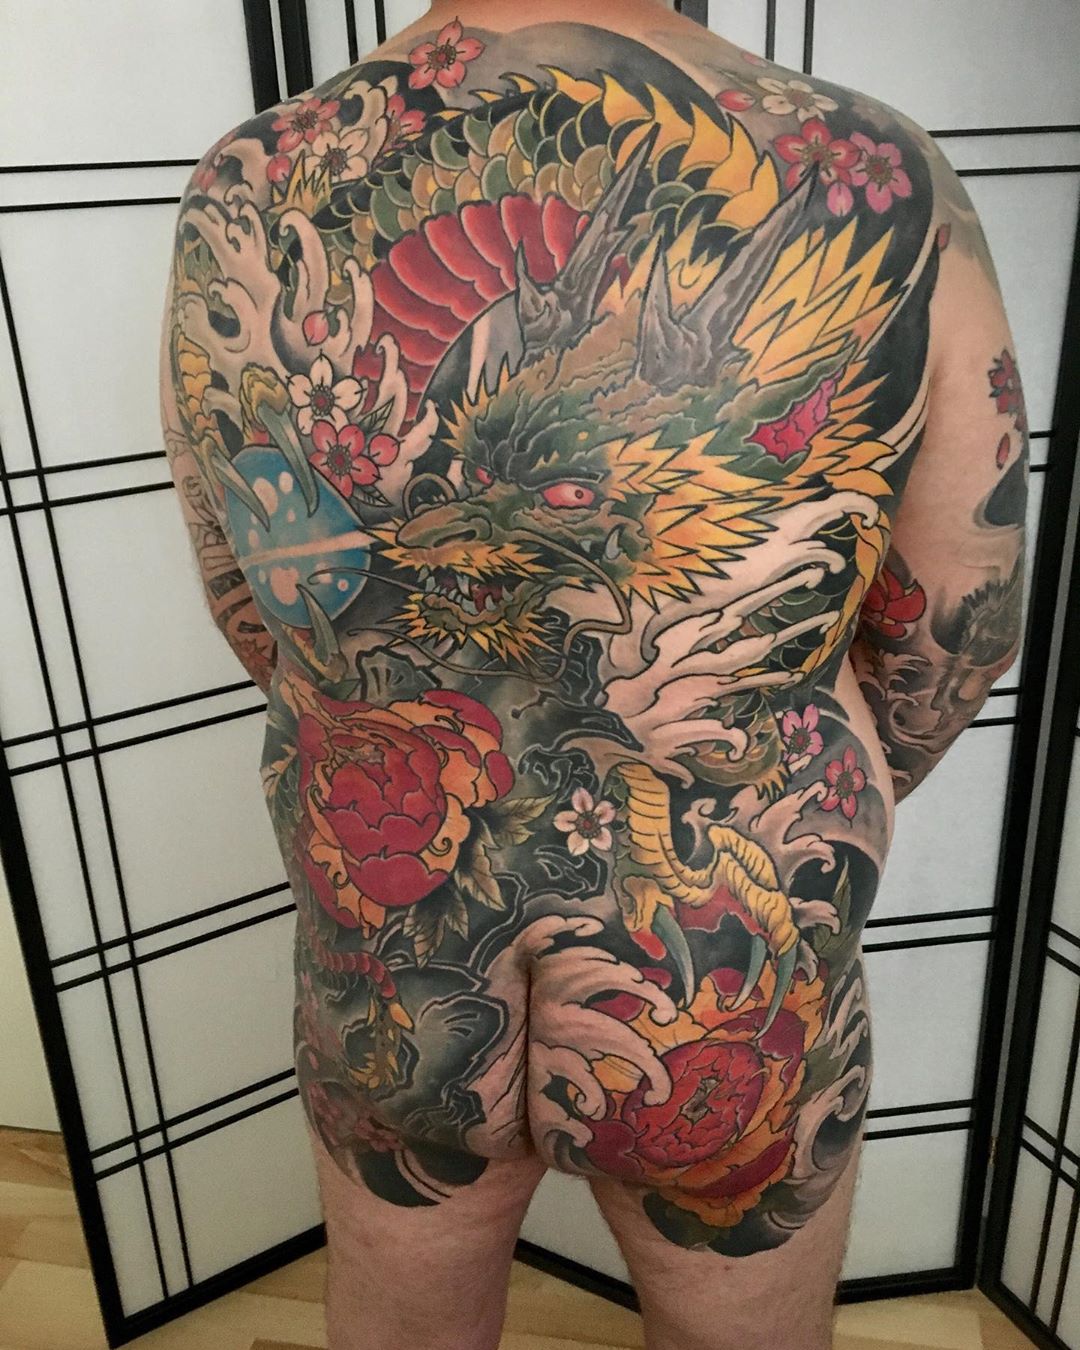 Peter Lagergren tattoo  new dragon vs tiger backpiece in progress